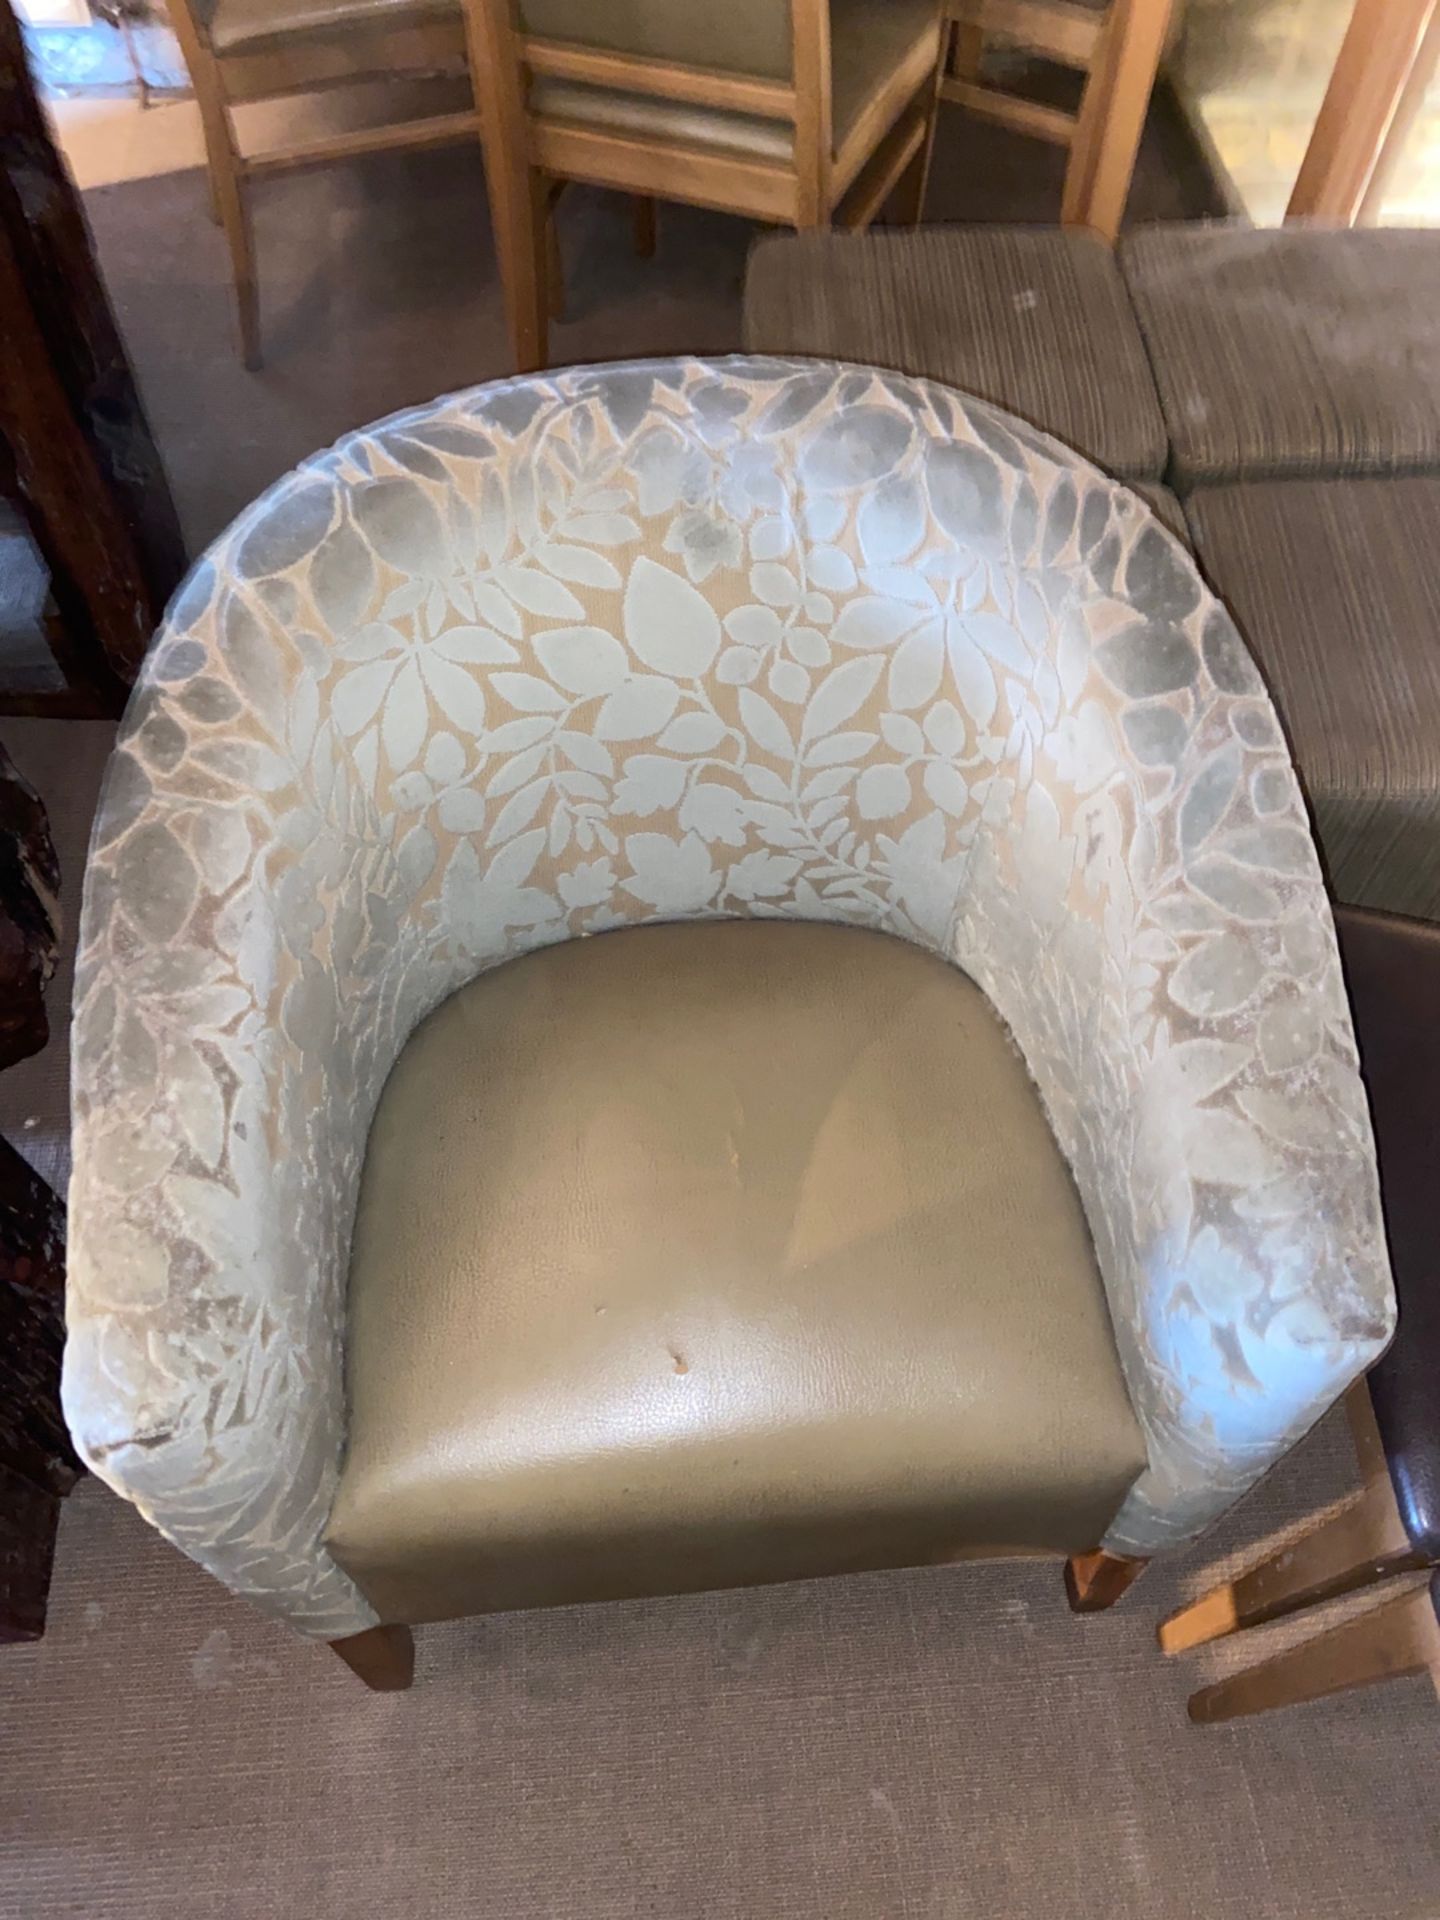 Dino Tub Chair Flower Design - Image 2 of 3